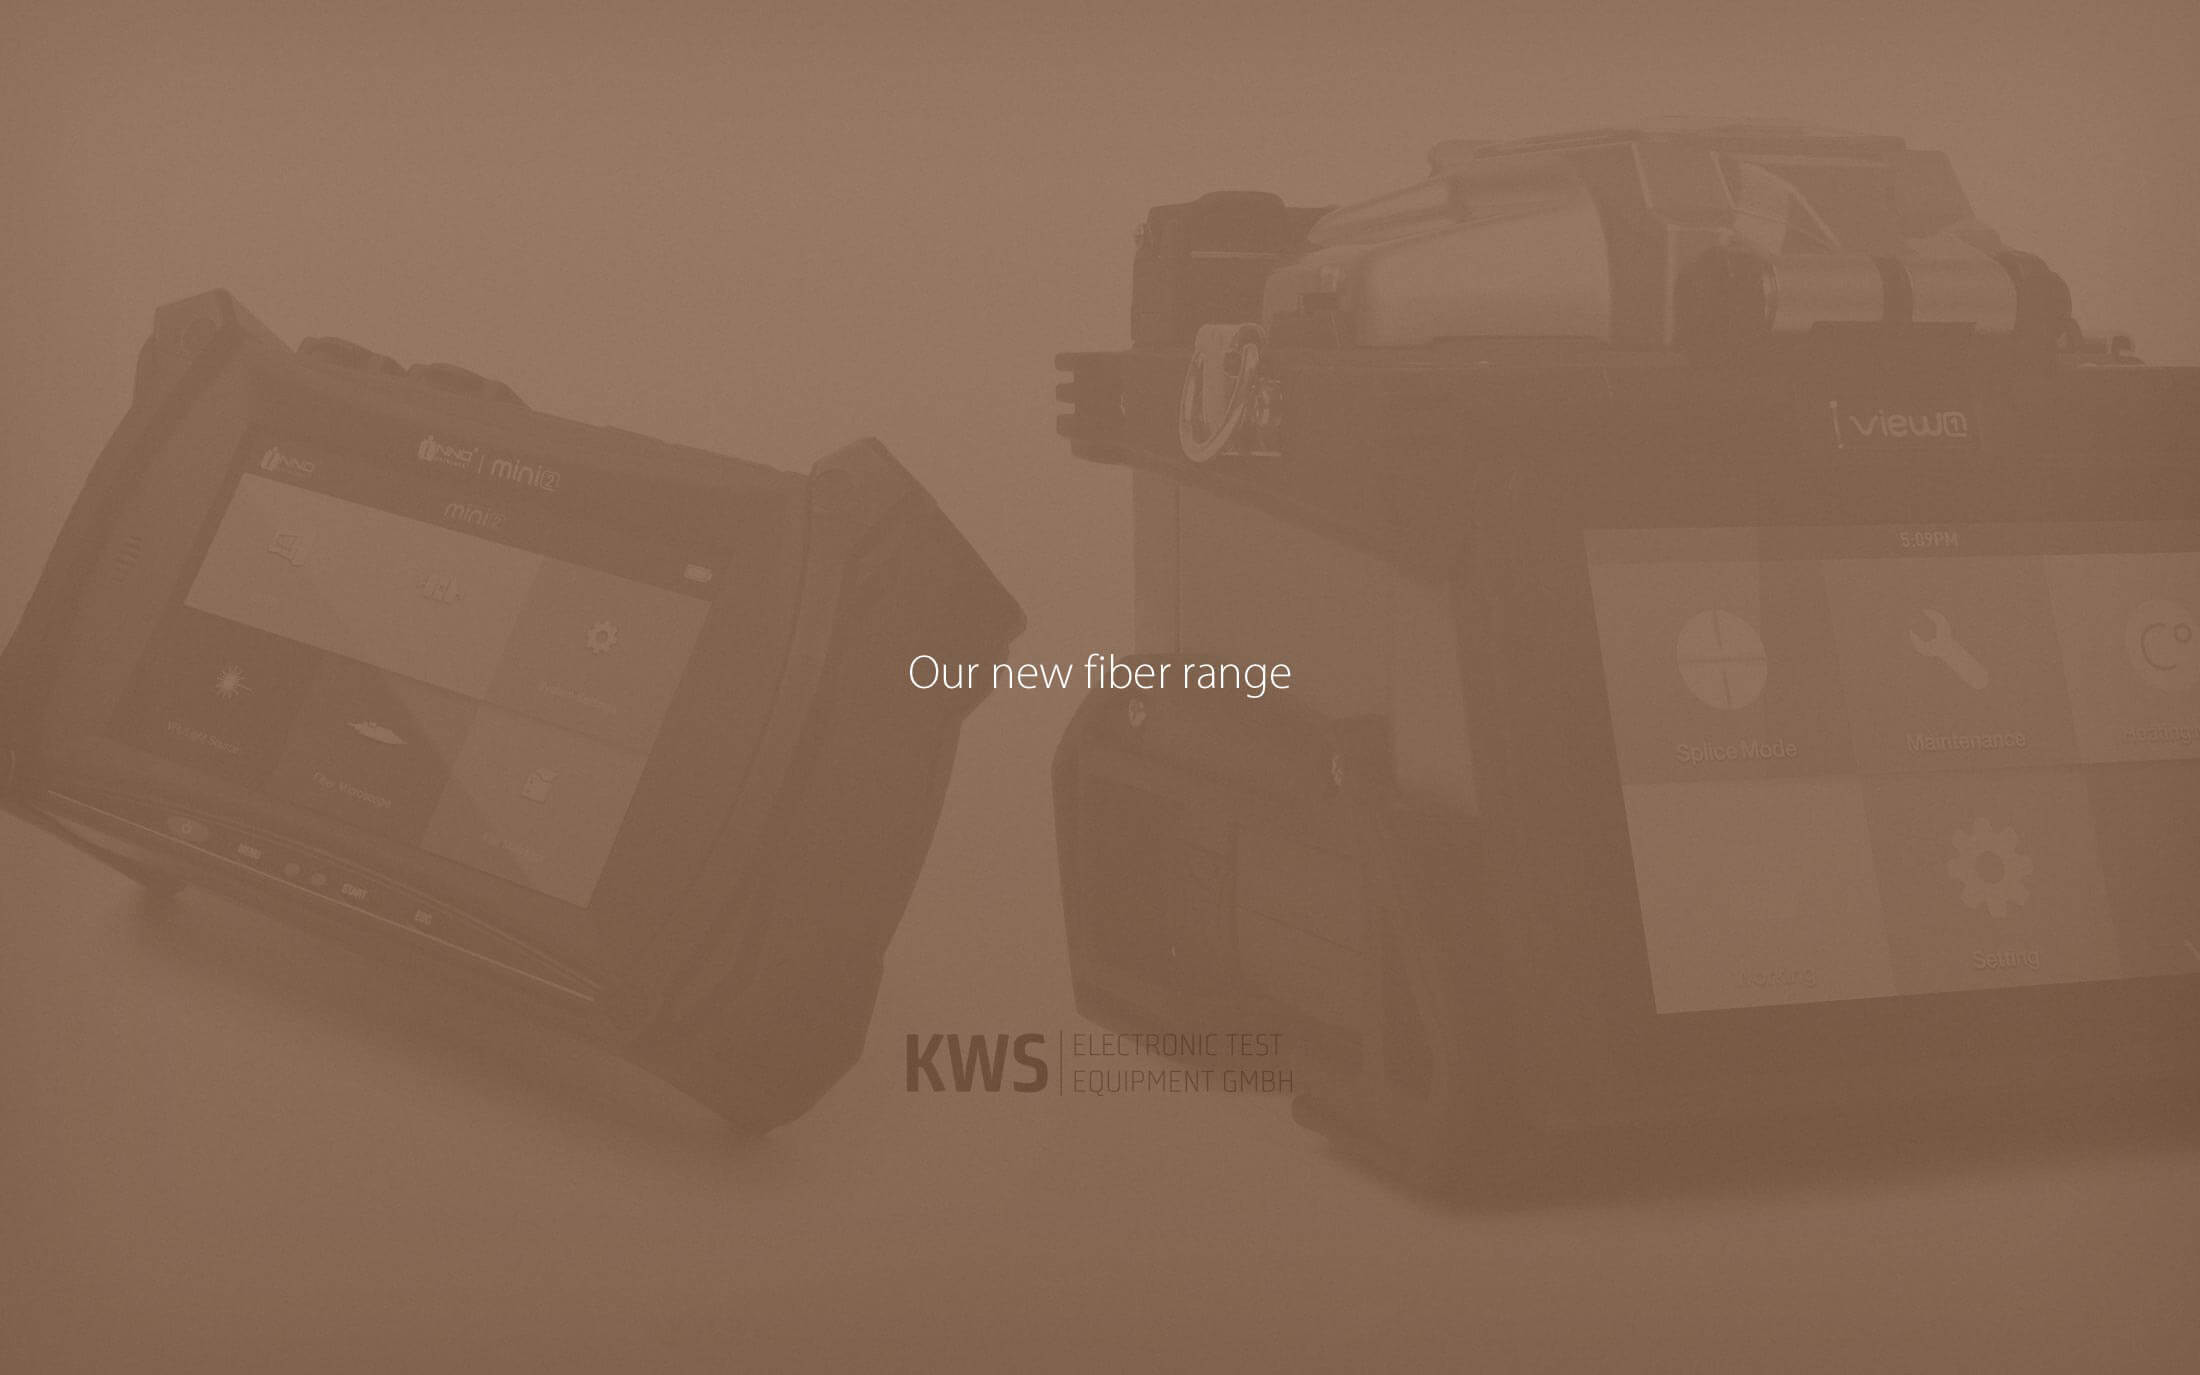 KWS Electronic News 2019: Our new fiber range